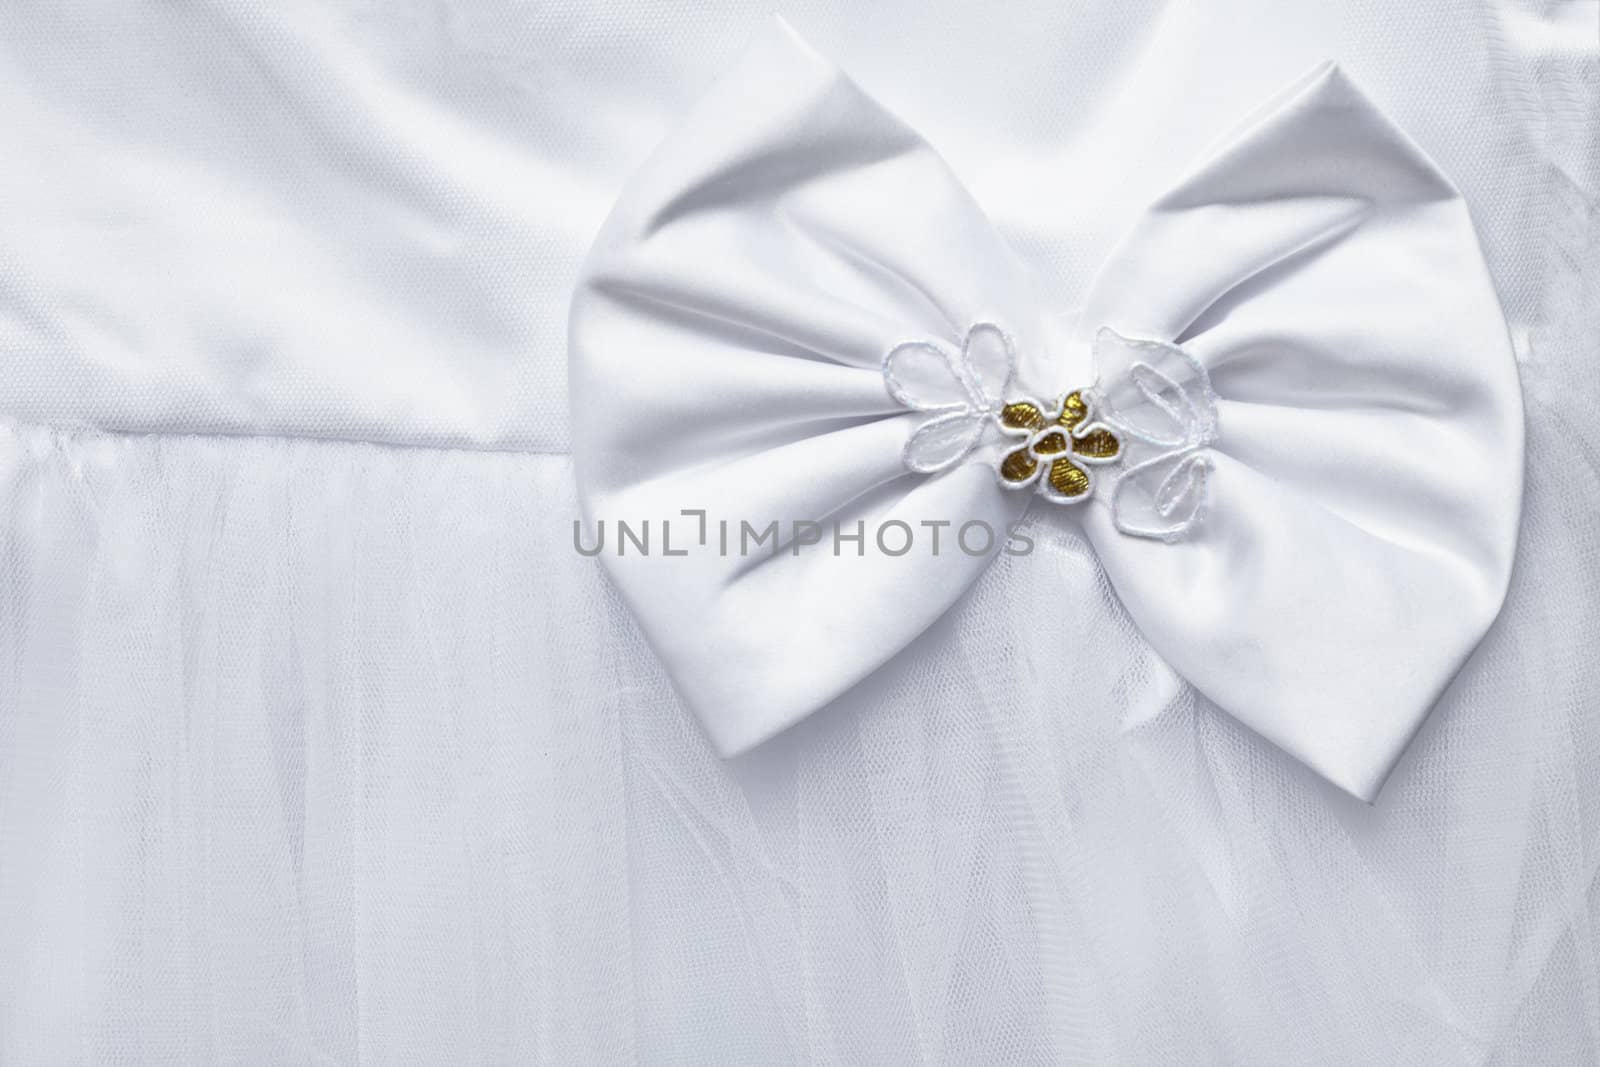 Big bow decorating the white dress - background